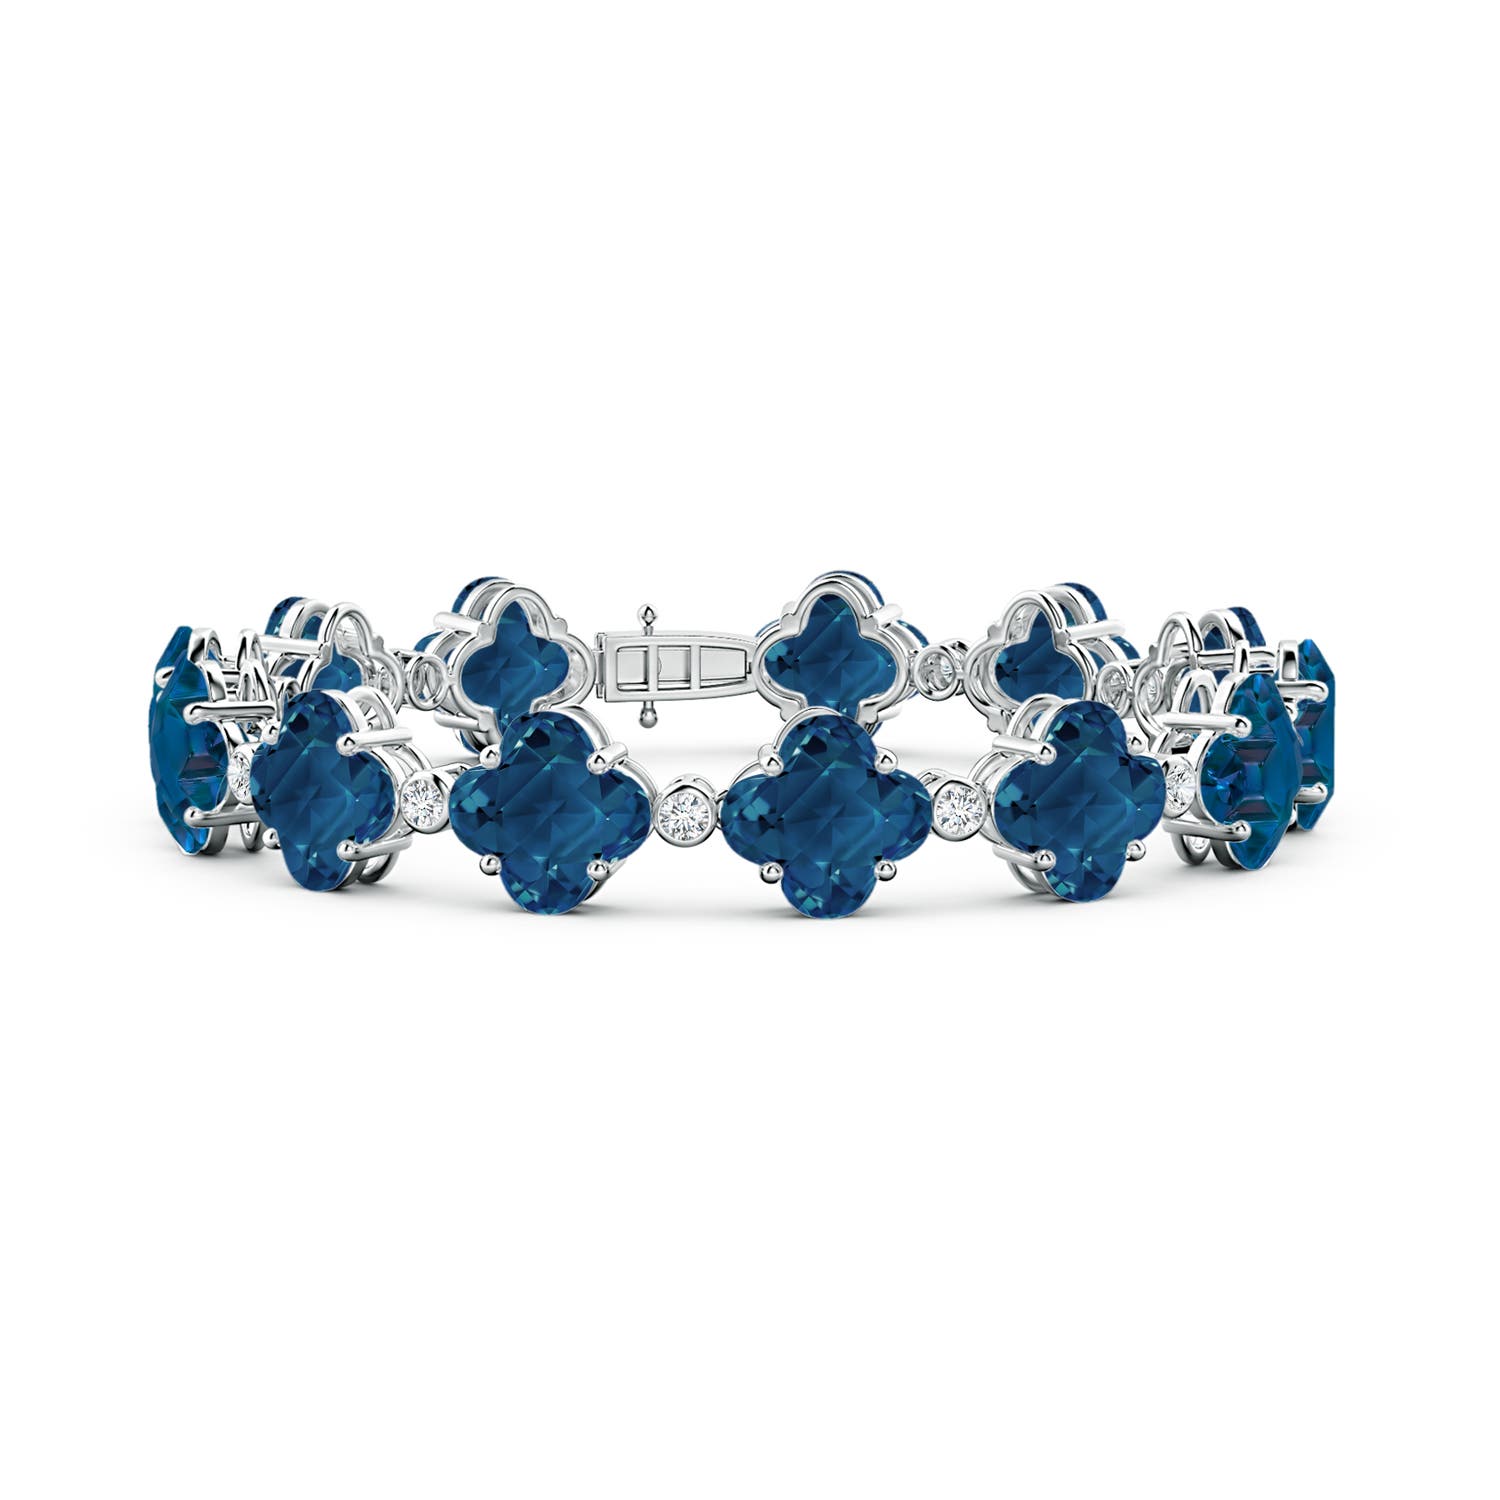 Buy Online Natural Rare Blue Topaz Stone Bracelet - Shubhanjali